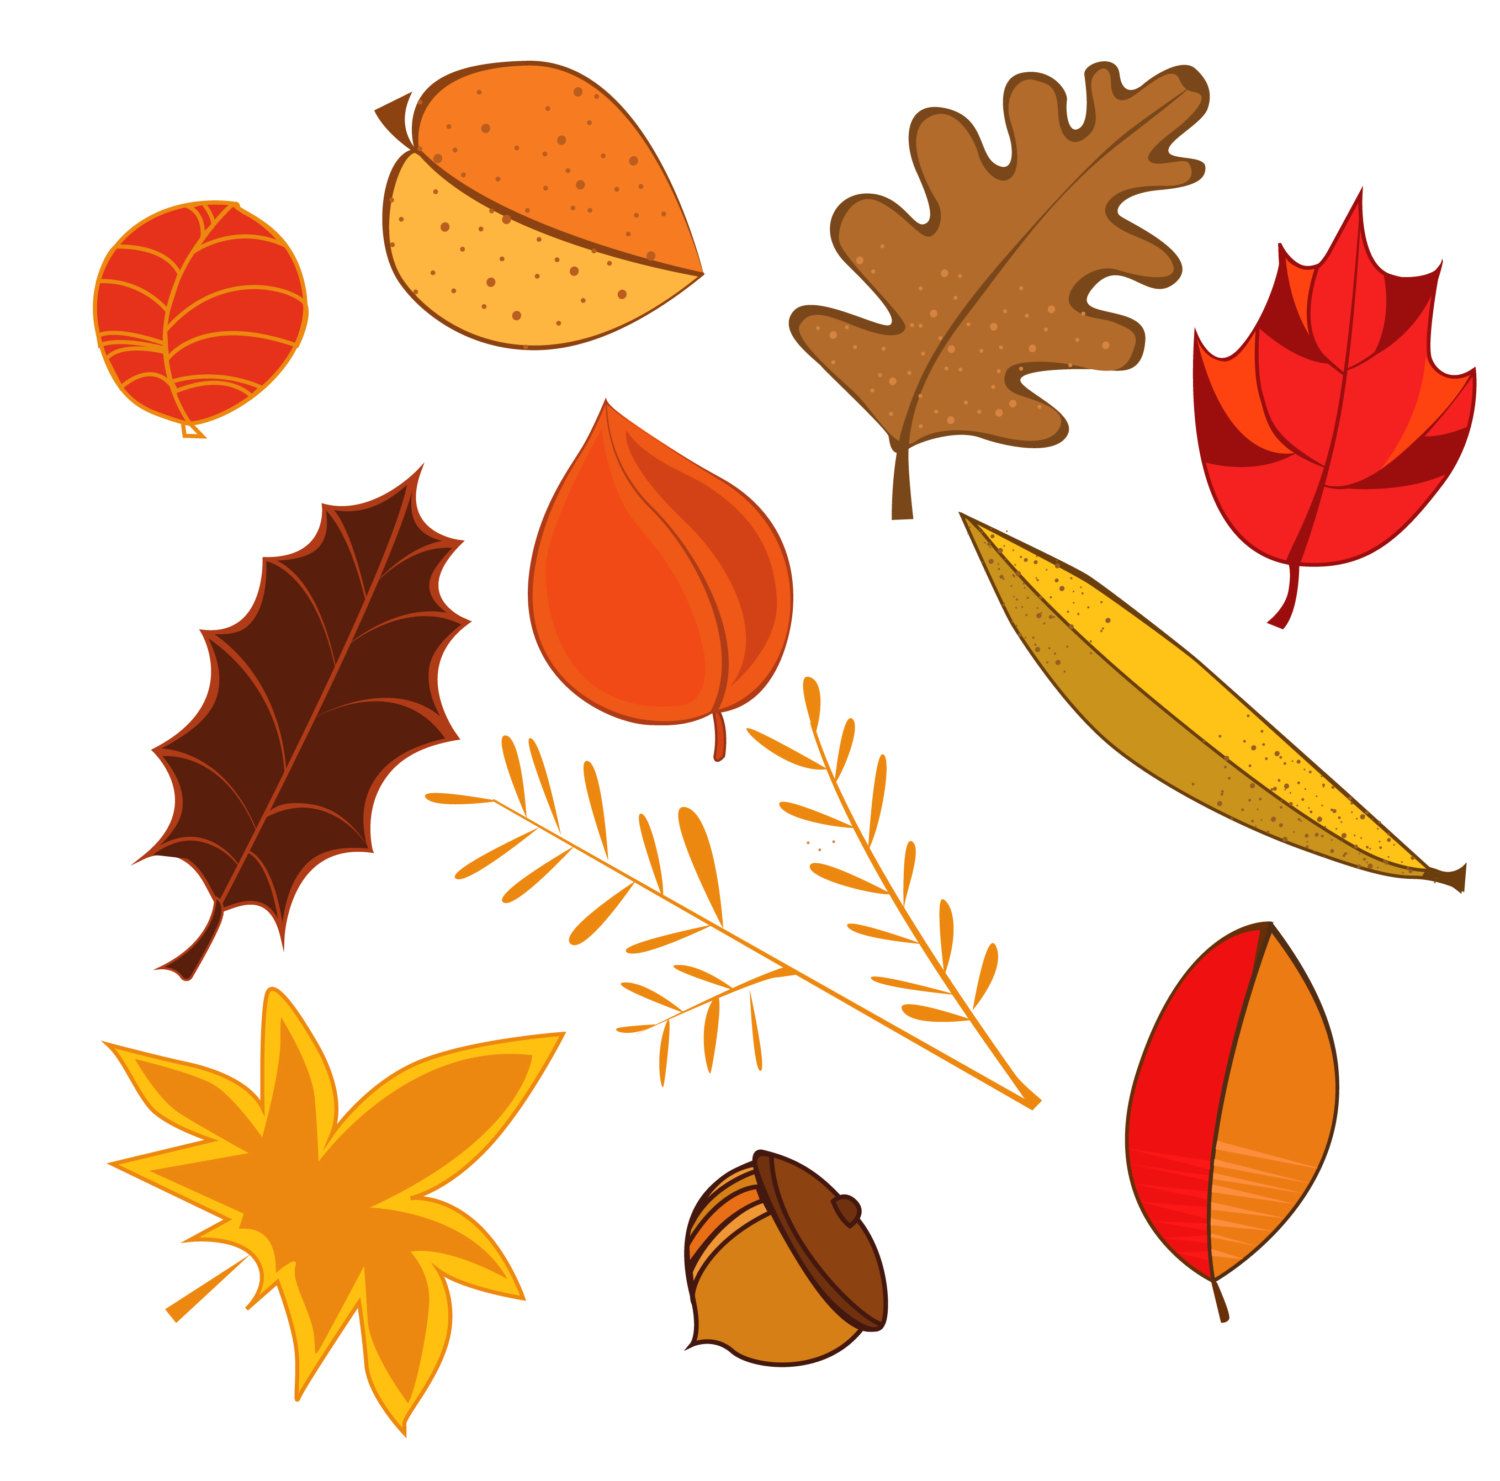 Autumn leaves clip art, leaves cliparts, autumn clipart.